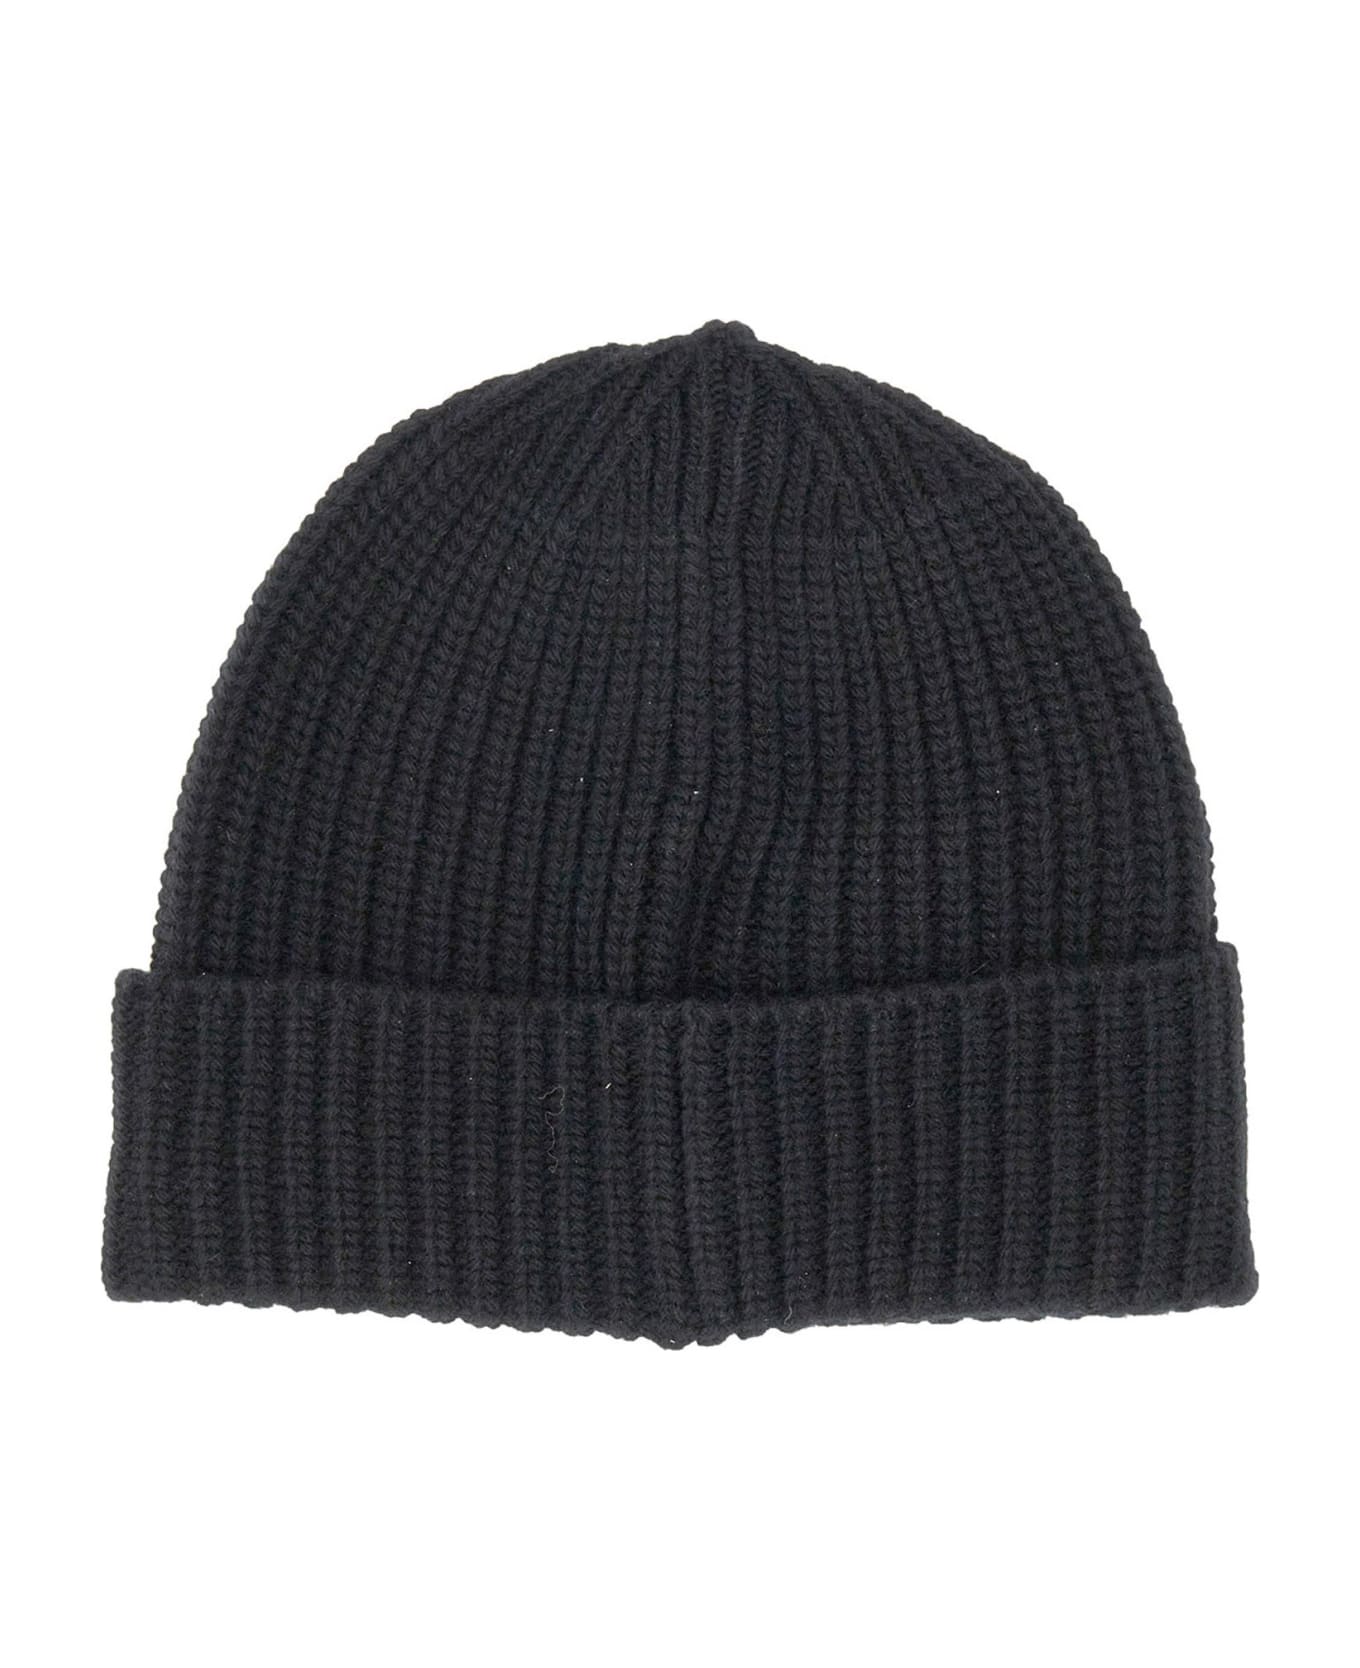 Stone Island Hats In Black Wool - Black 帽子